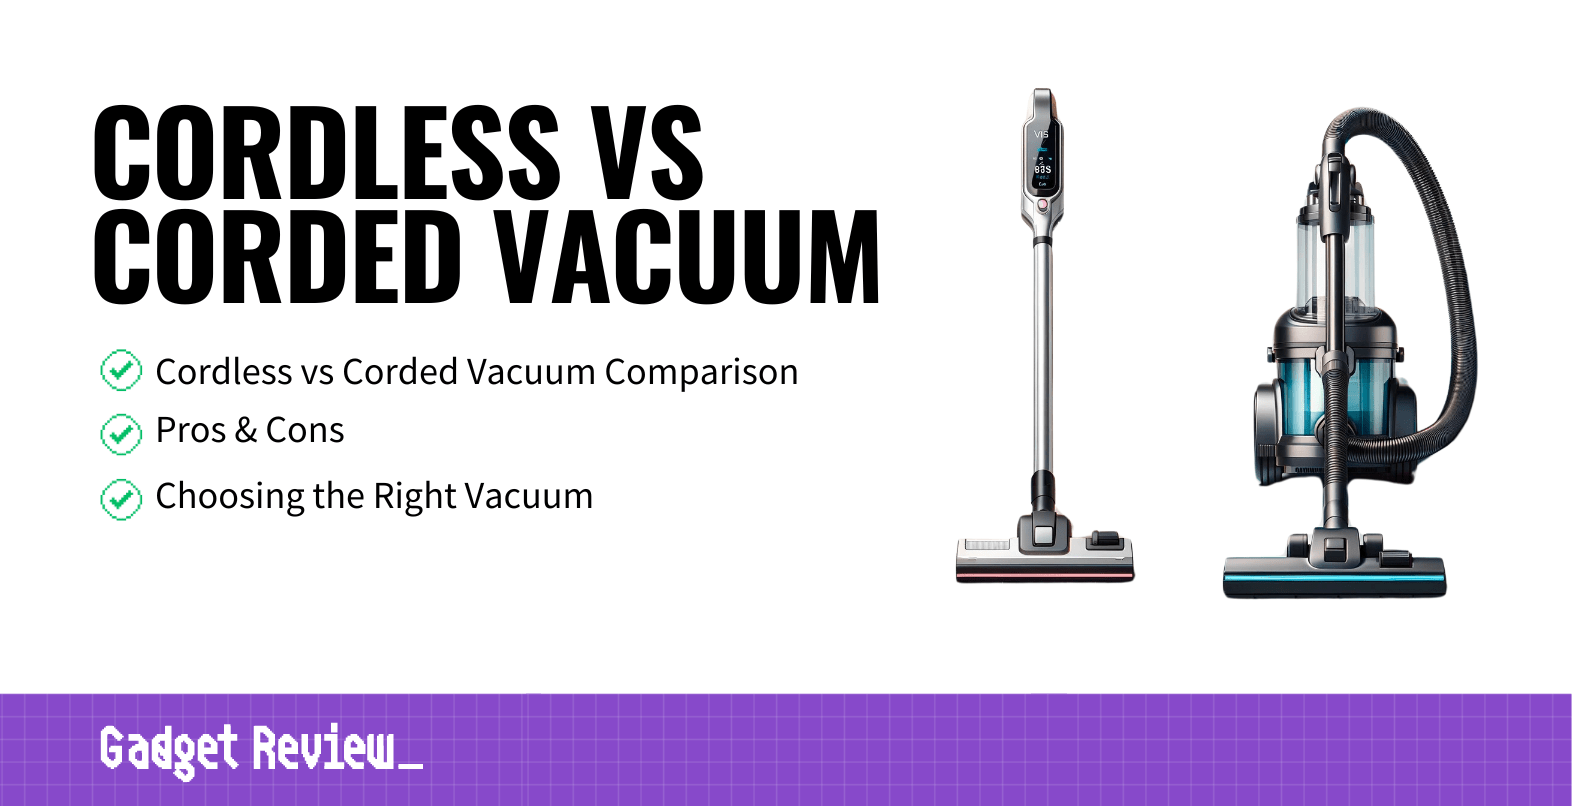 Cordless vs Corded Vacuum